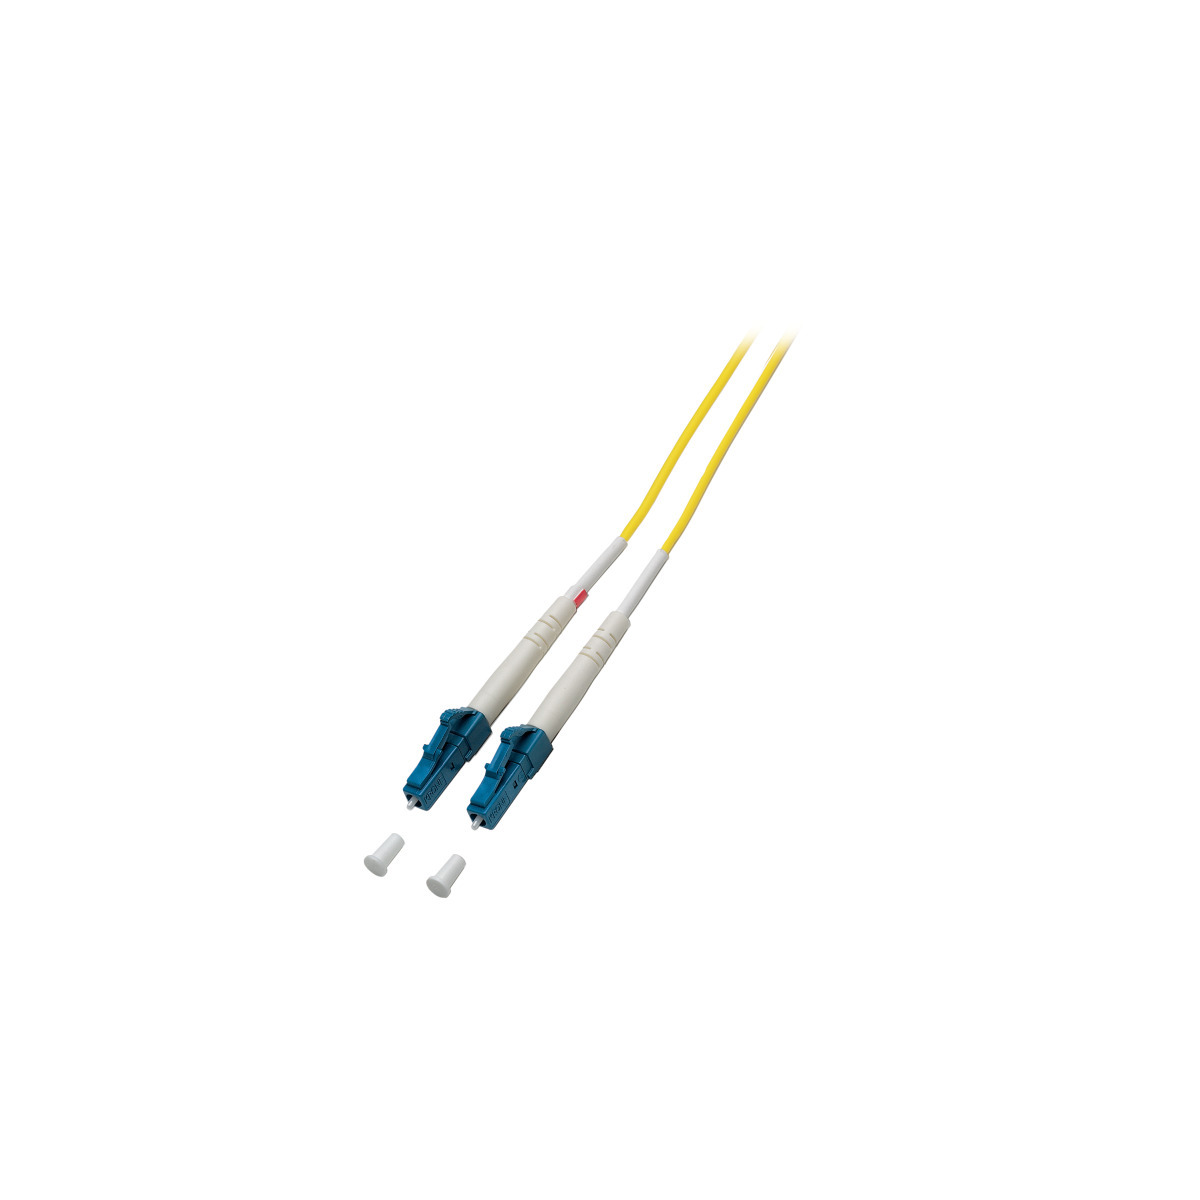 COMMUNIK Kabel Simplex LC m - Jumper / 2 LC, Glasfaserkabel